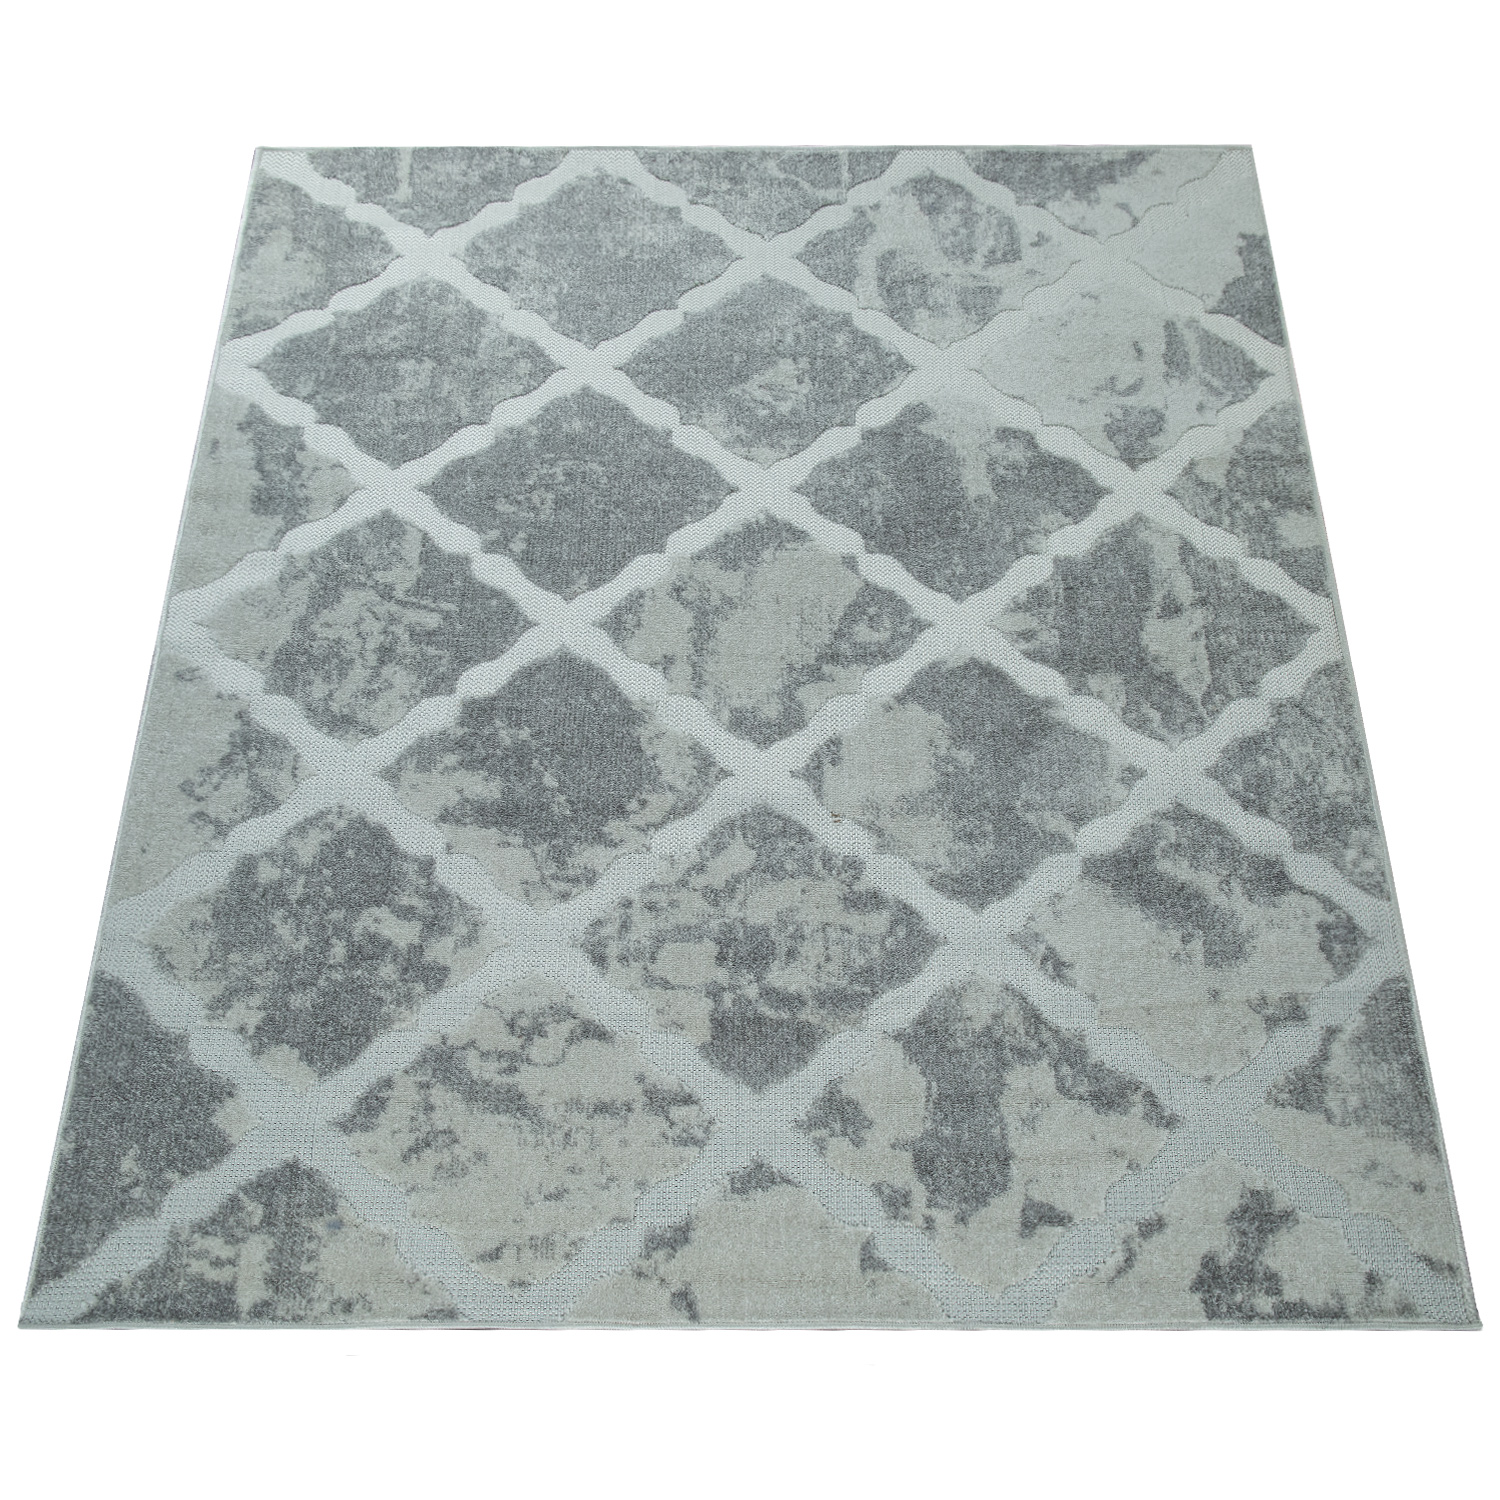 Outdoor Teppich Marmor Optik Rauten Muster Grau 